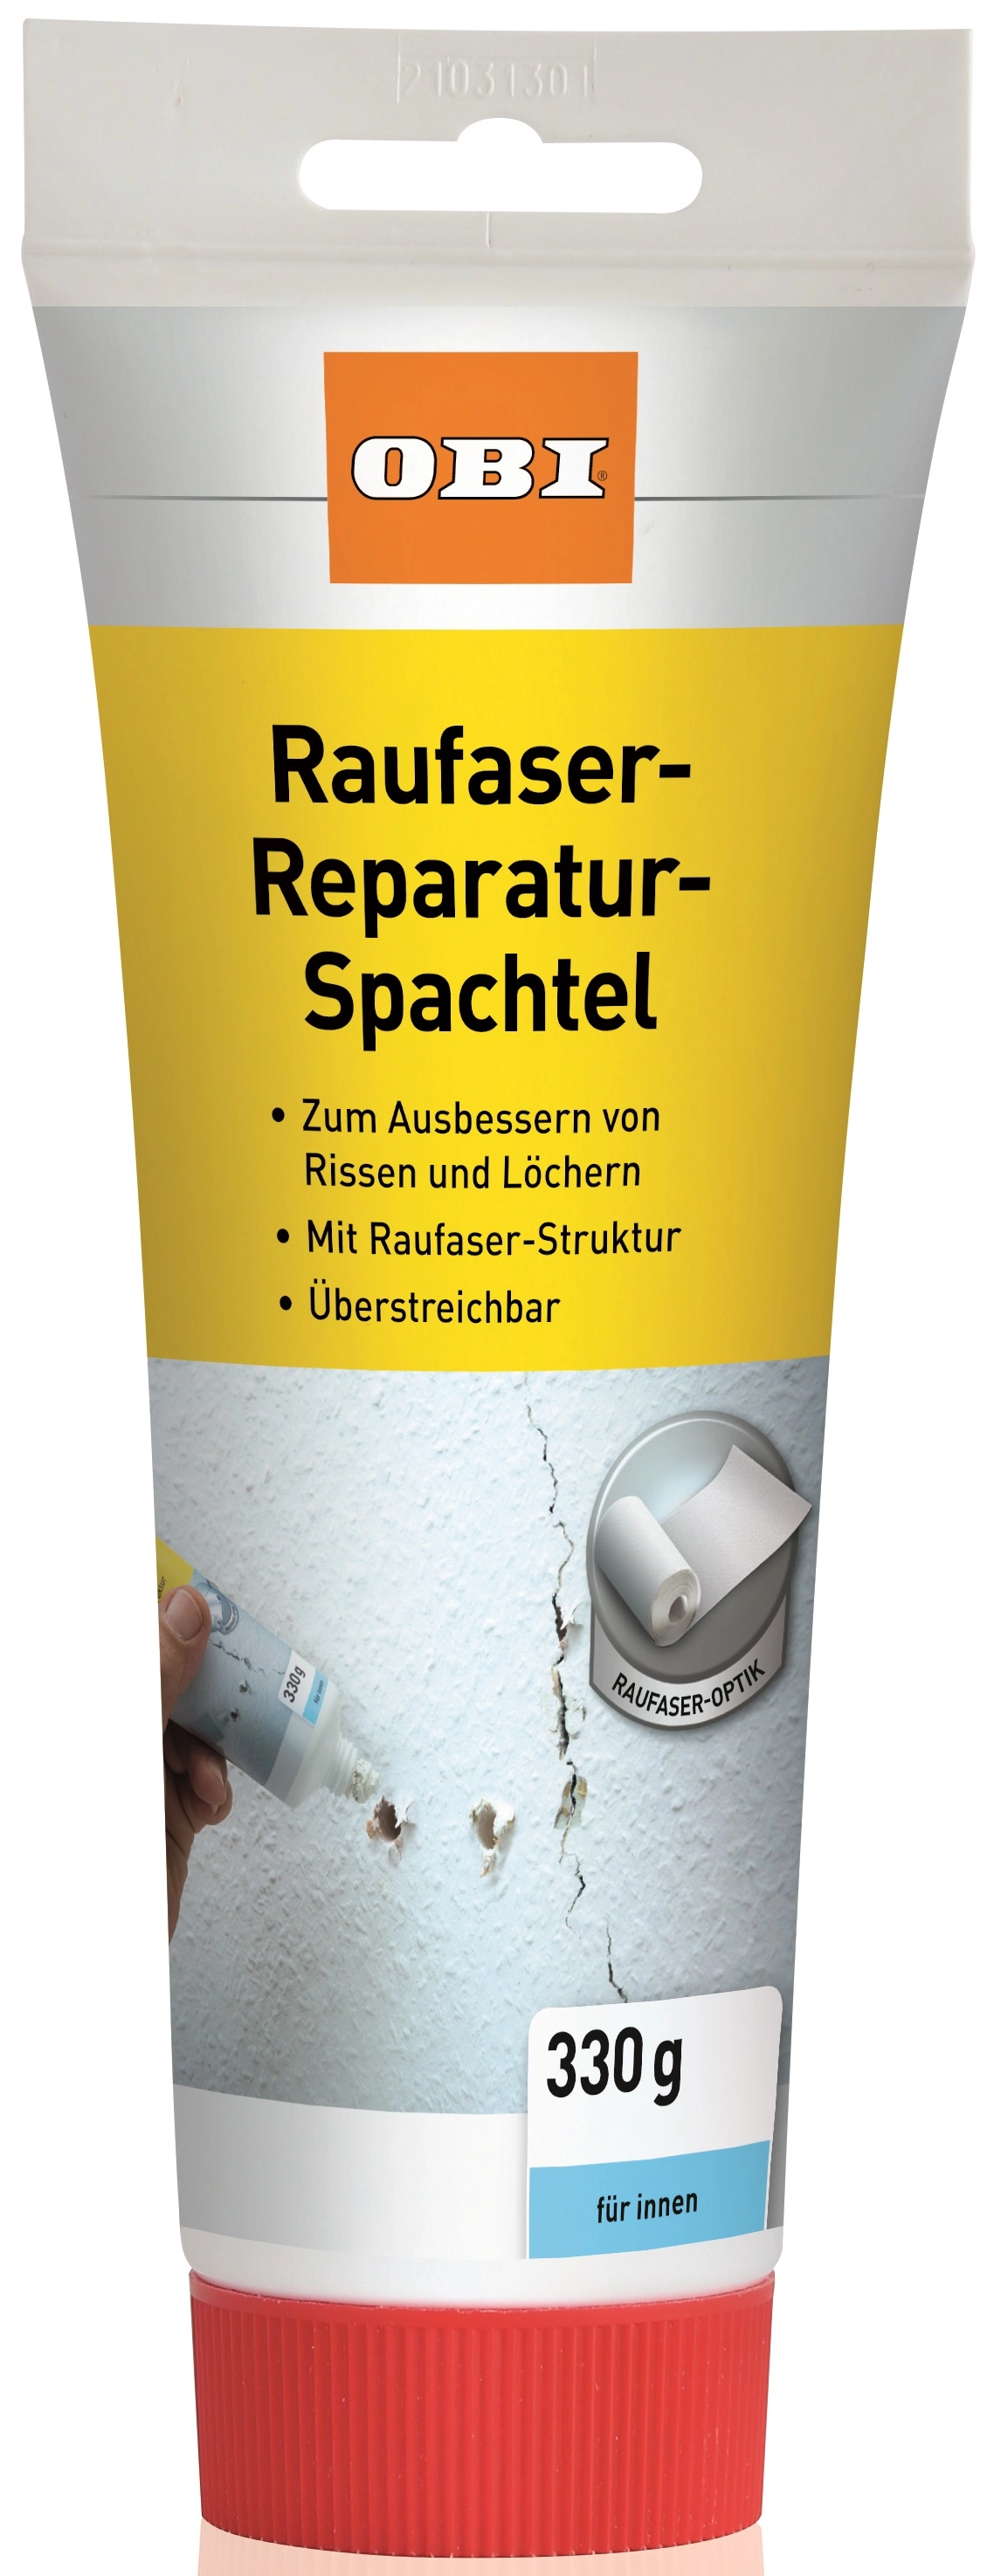 RADEX PLASTIC FLEX Spachtel für Kunststoff 0,5 kg inkl. Härter - Onli, 5,95  €